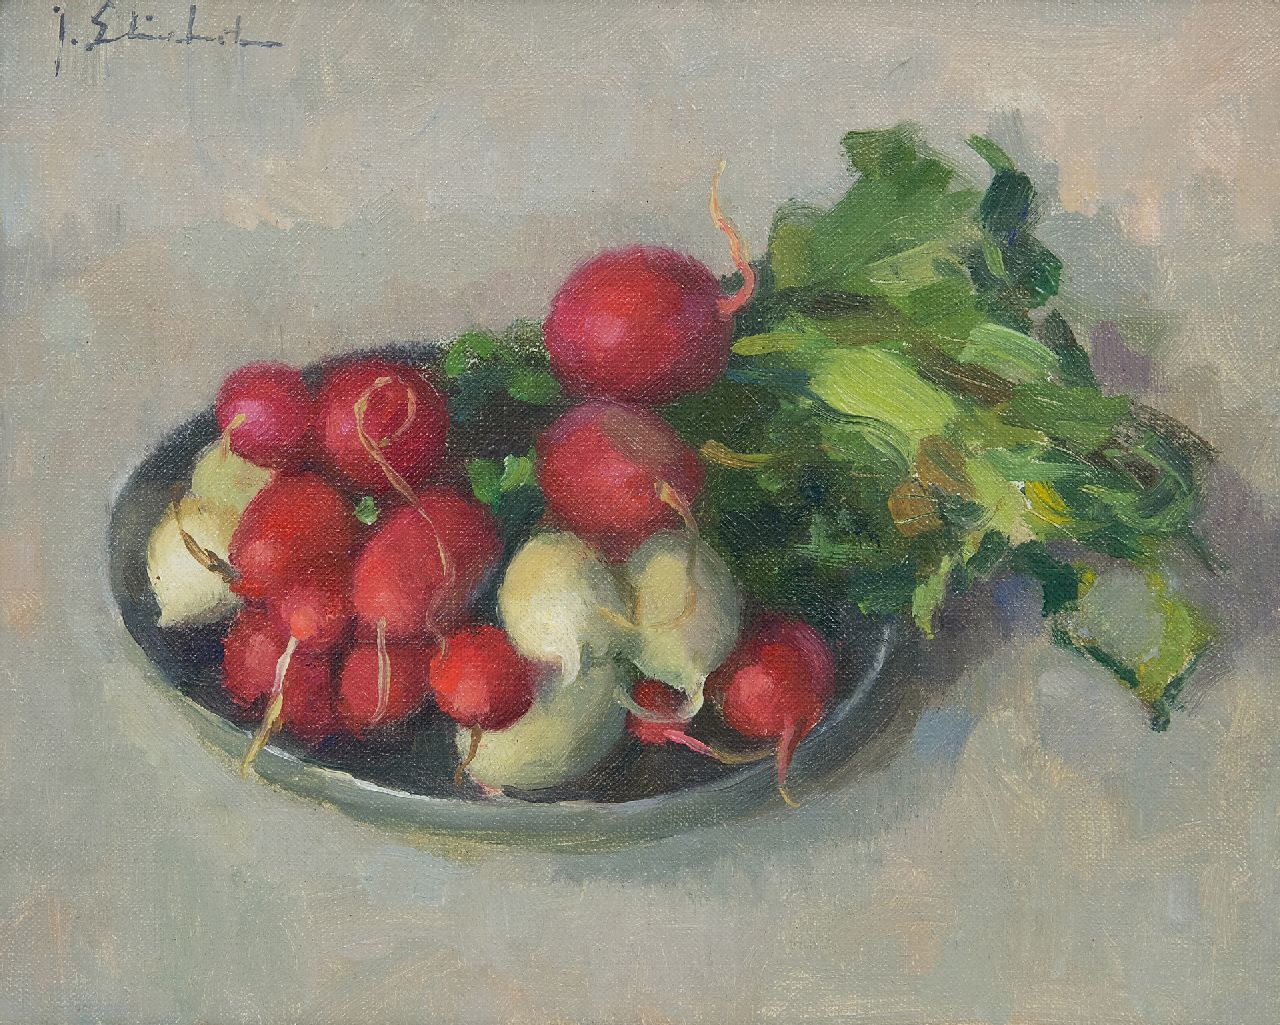 Stierhout J.A.U.  | Josephus Antonius Ubaldus 'Joop' Stierhout, Red and white radishes on a plate, oil on canvas 20.1 x 25.3 cm, signed u.l.